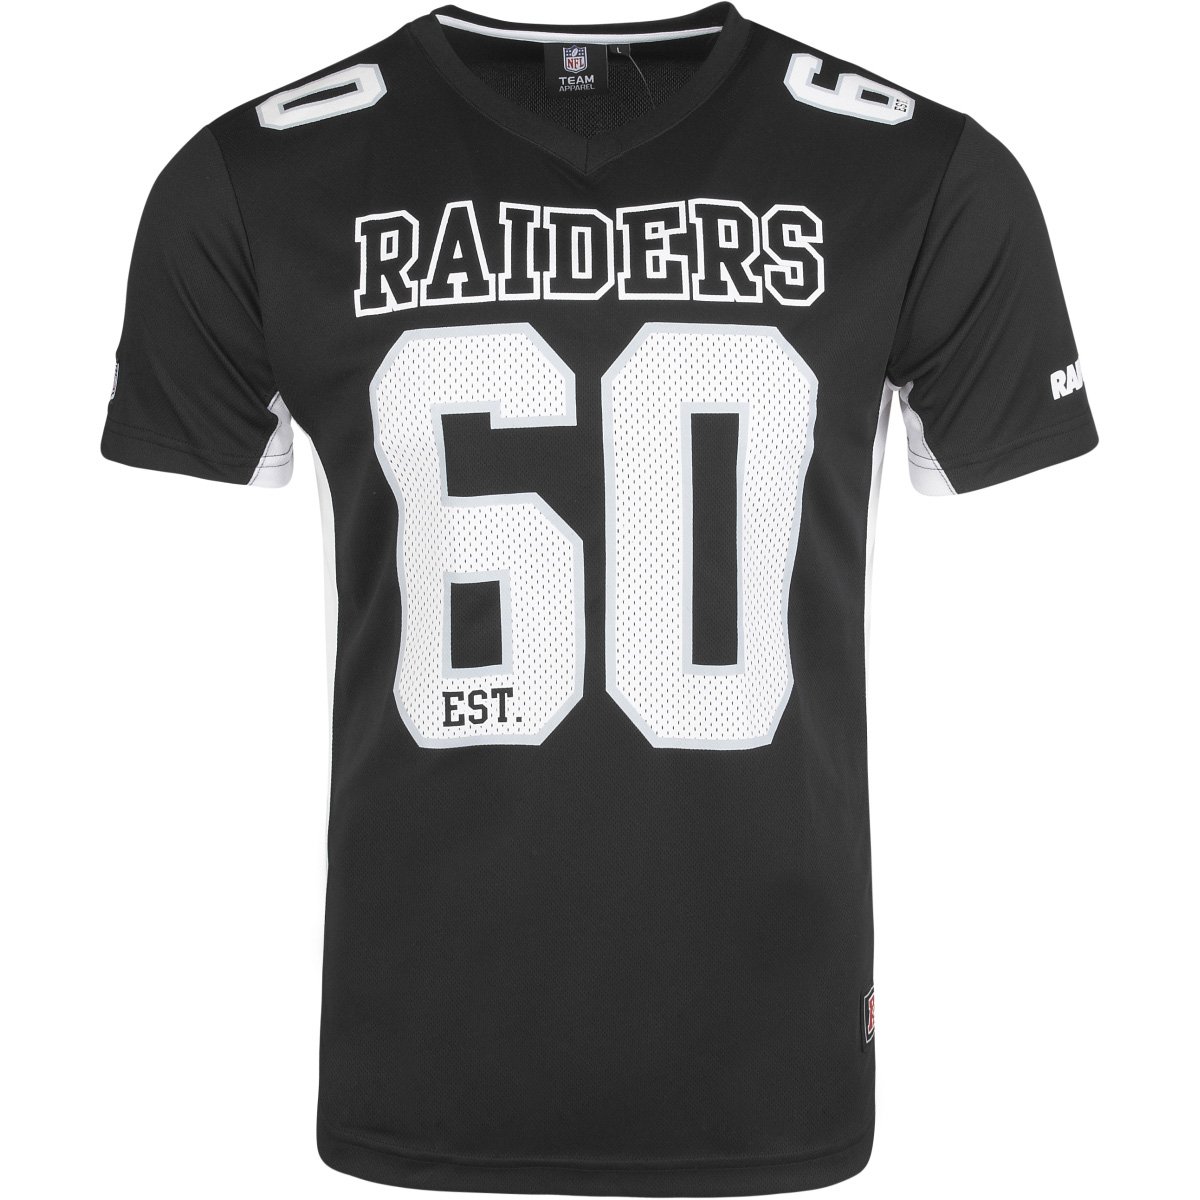 Buy Majestic NFL Mesh Polyester Jersey Shirt - Oakland Raiders